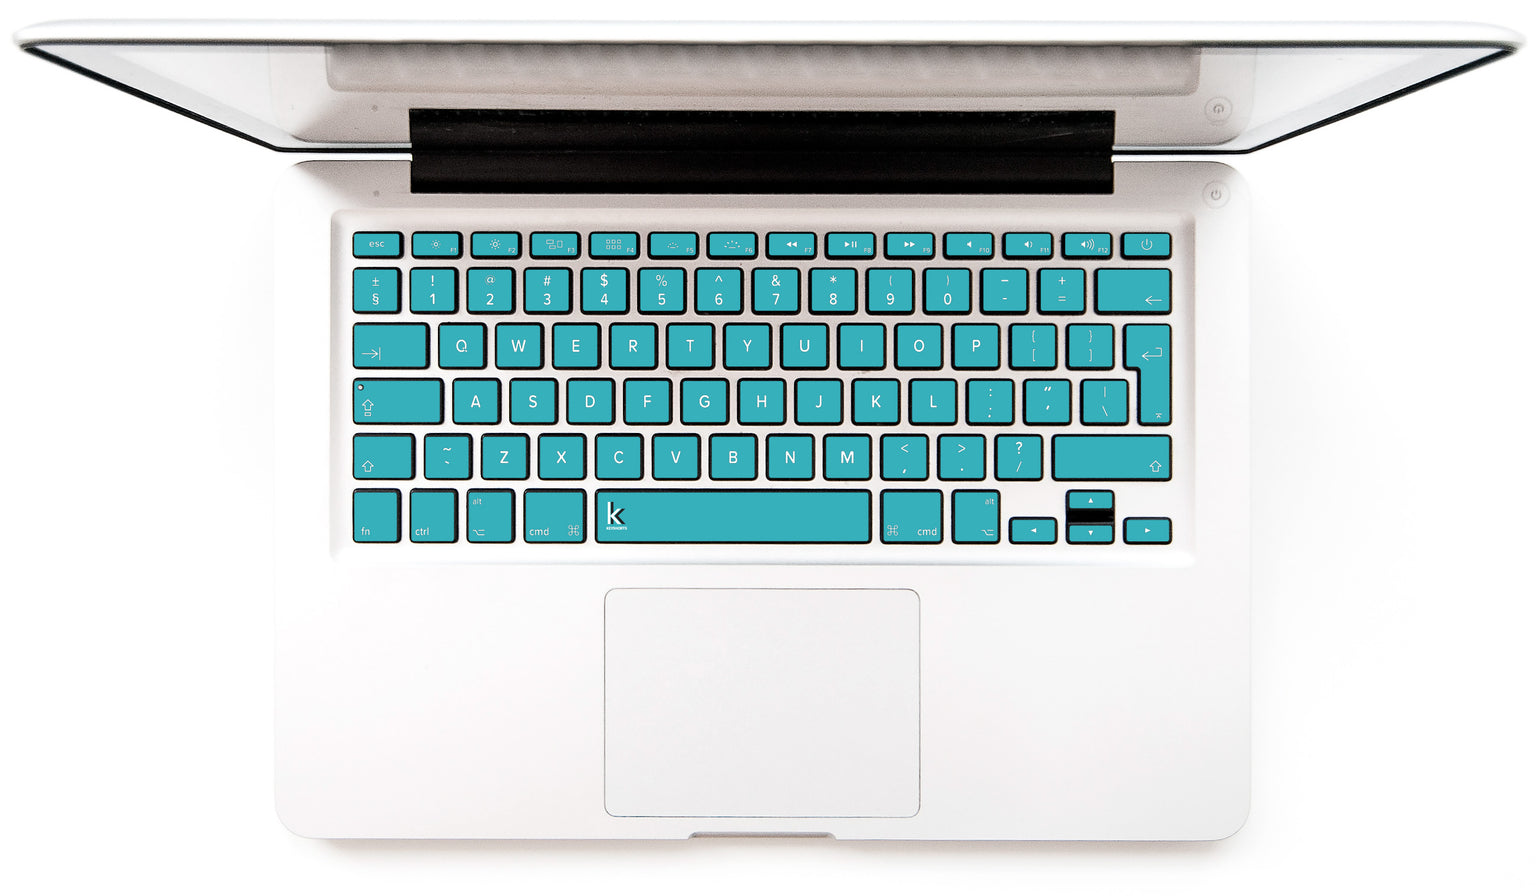 Teal Night MacBook Keyboard Stickers